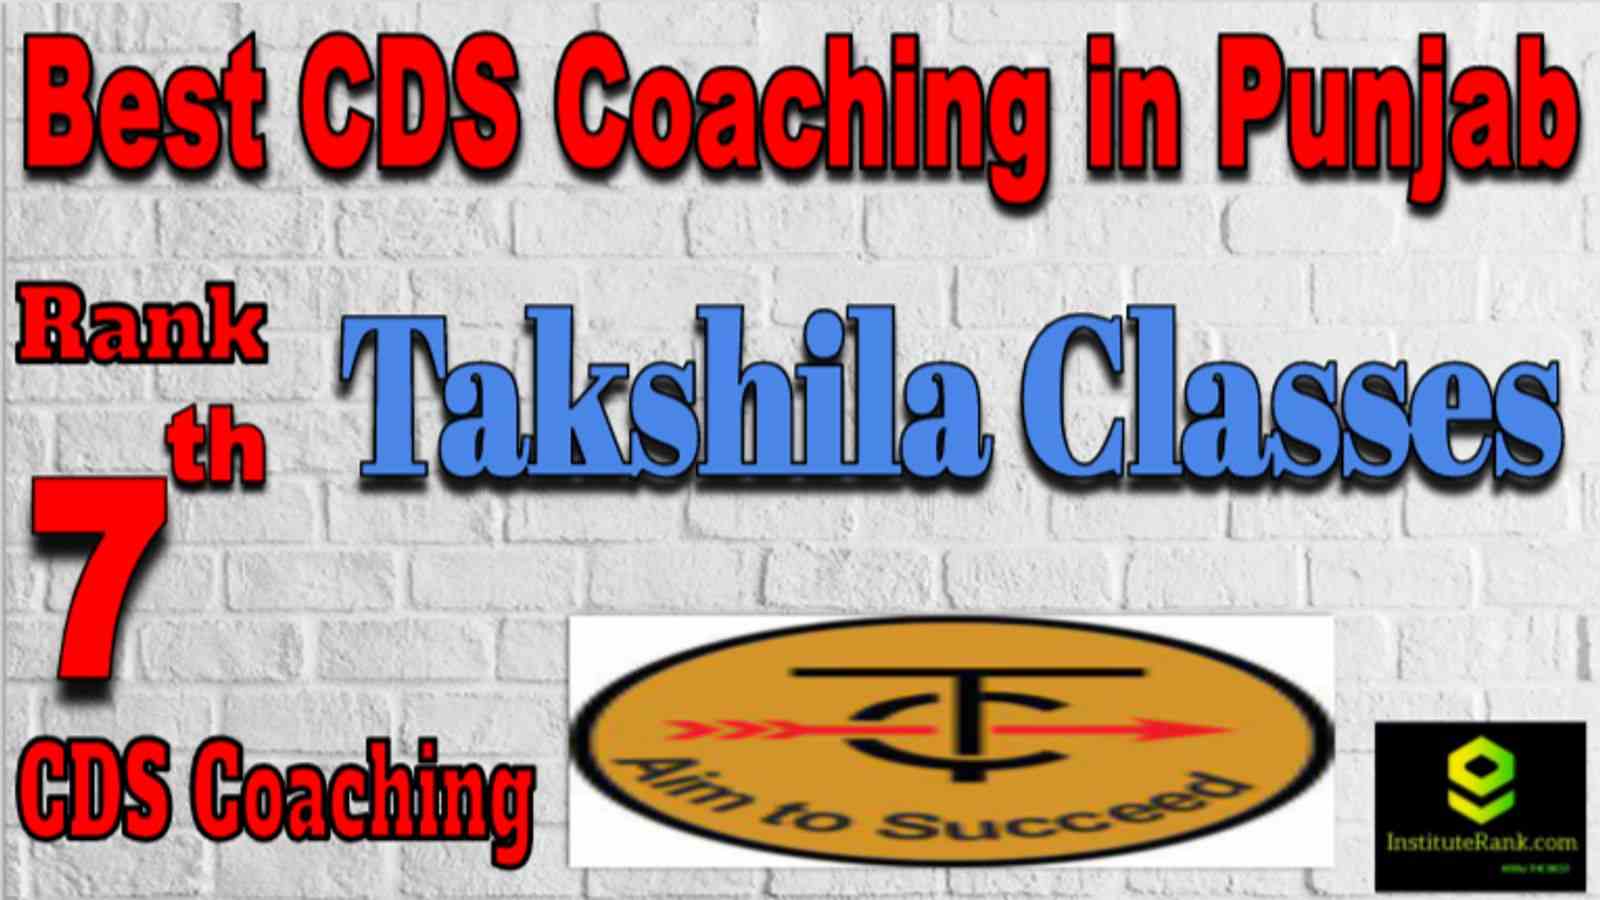 Rank 7 Best CDS Coaching in Punjab